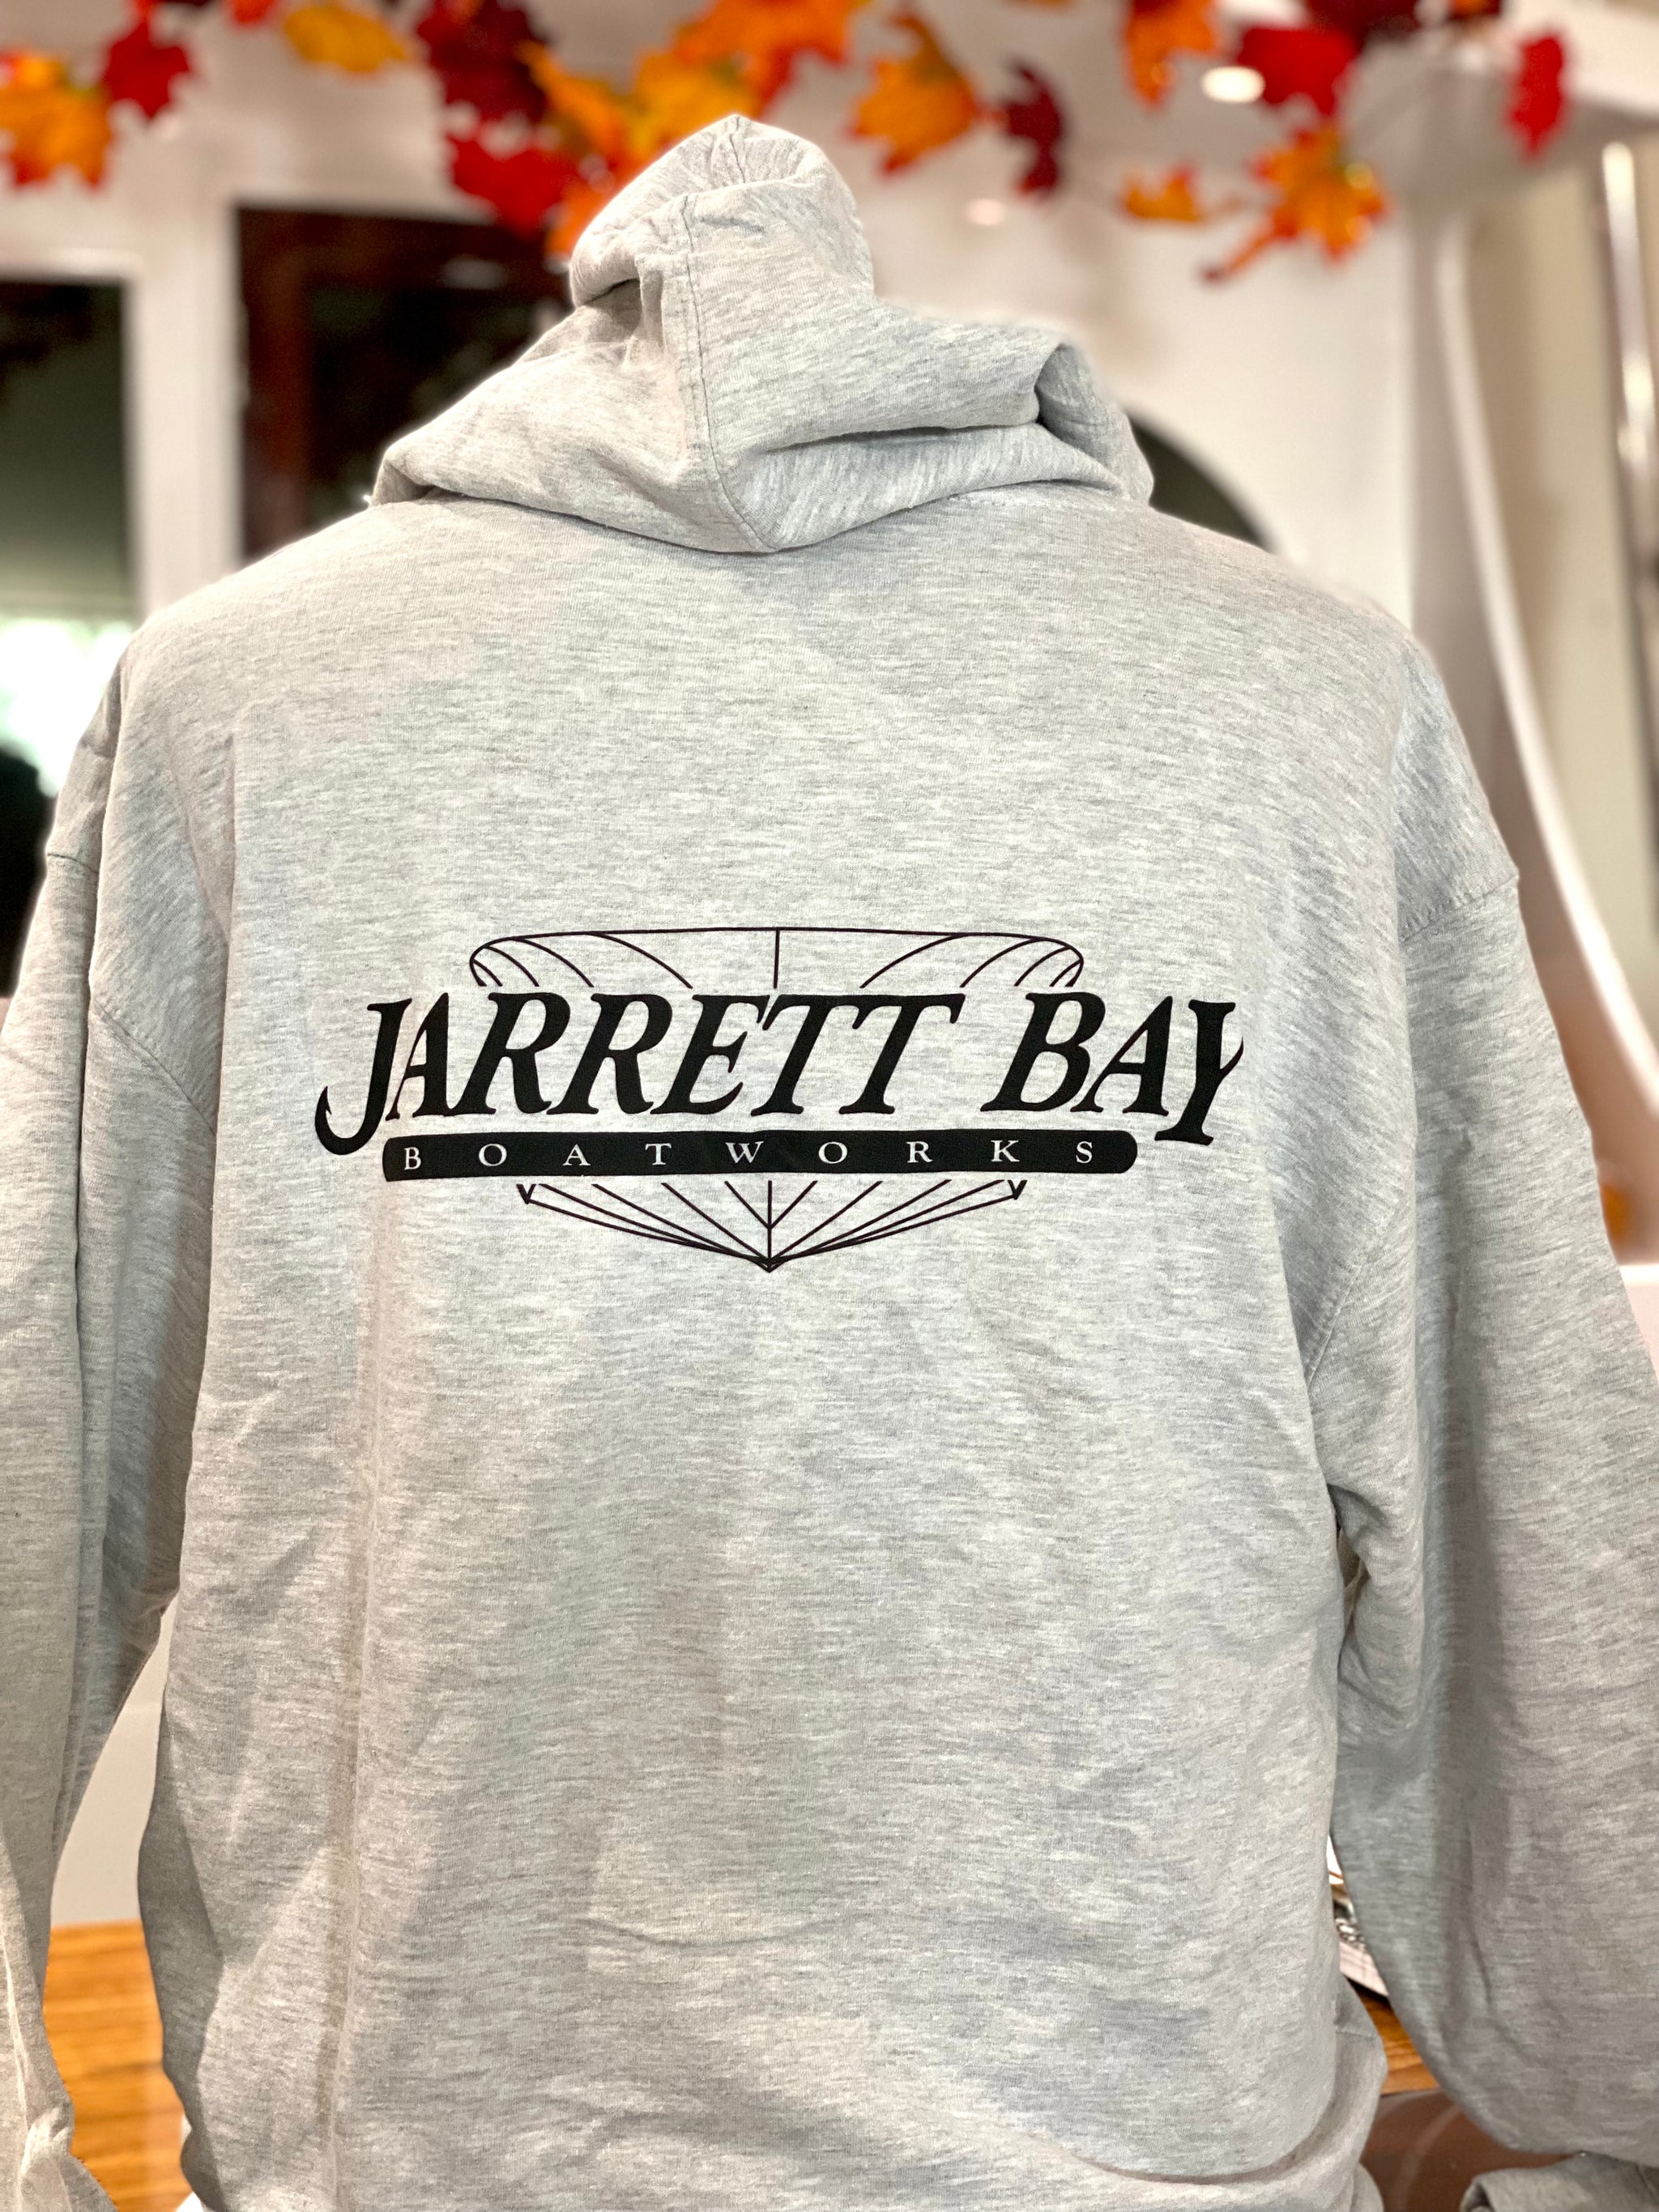 Jarrett Bay HUCK Performance Bucket - Jarrett Bay Boathouse